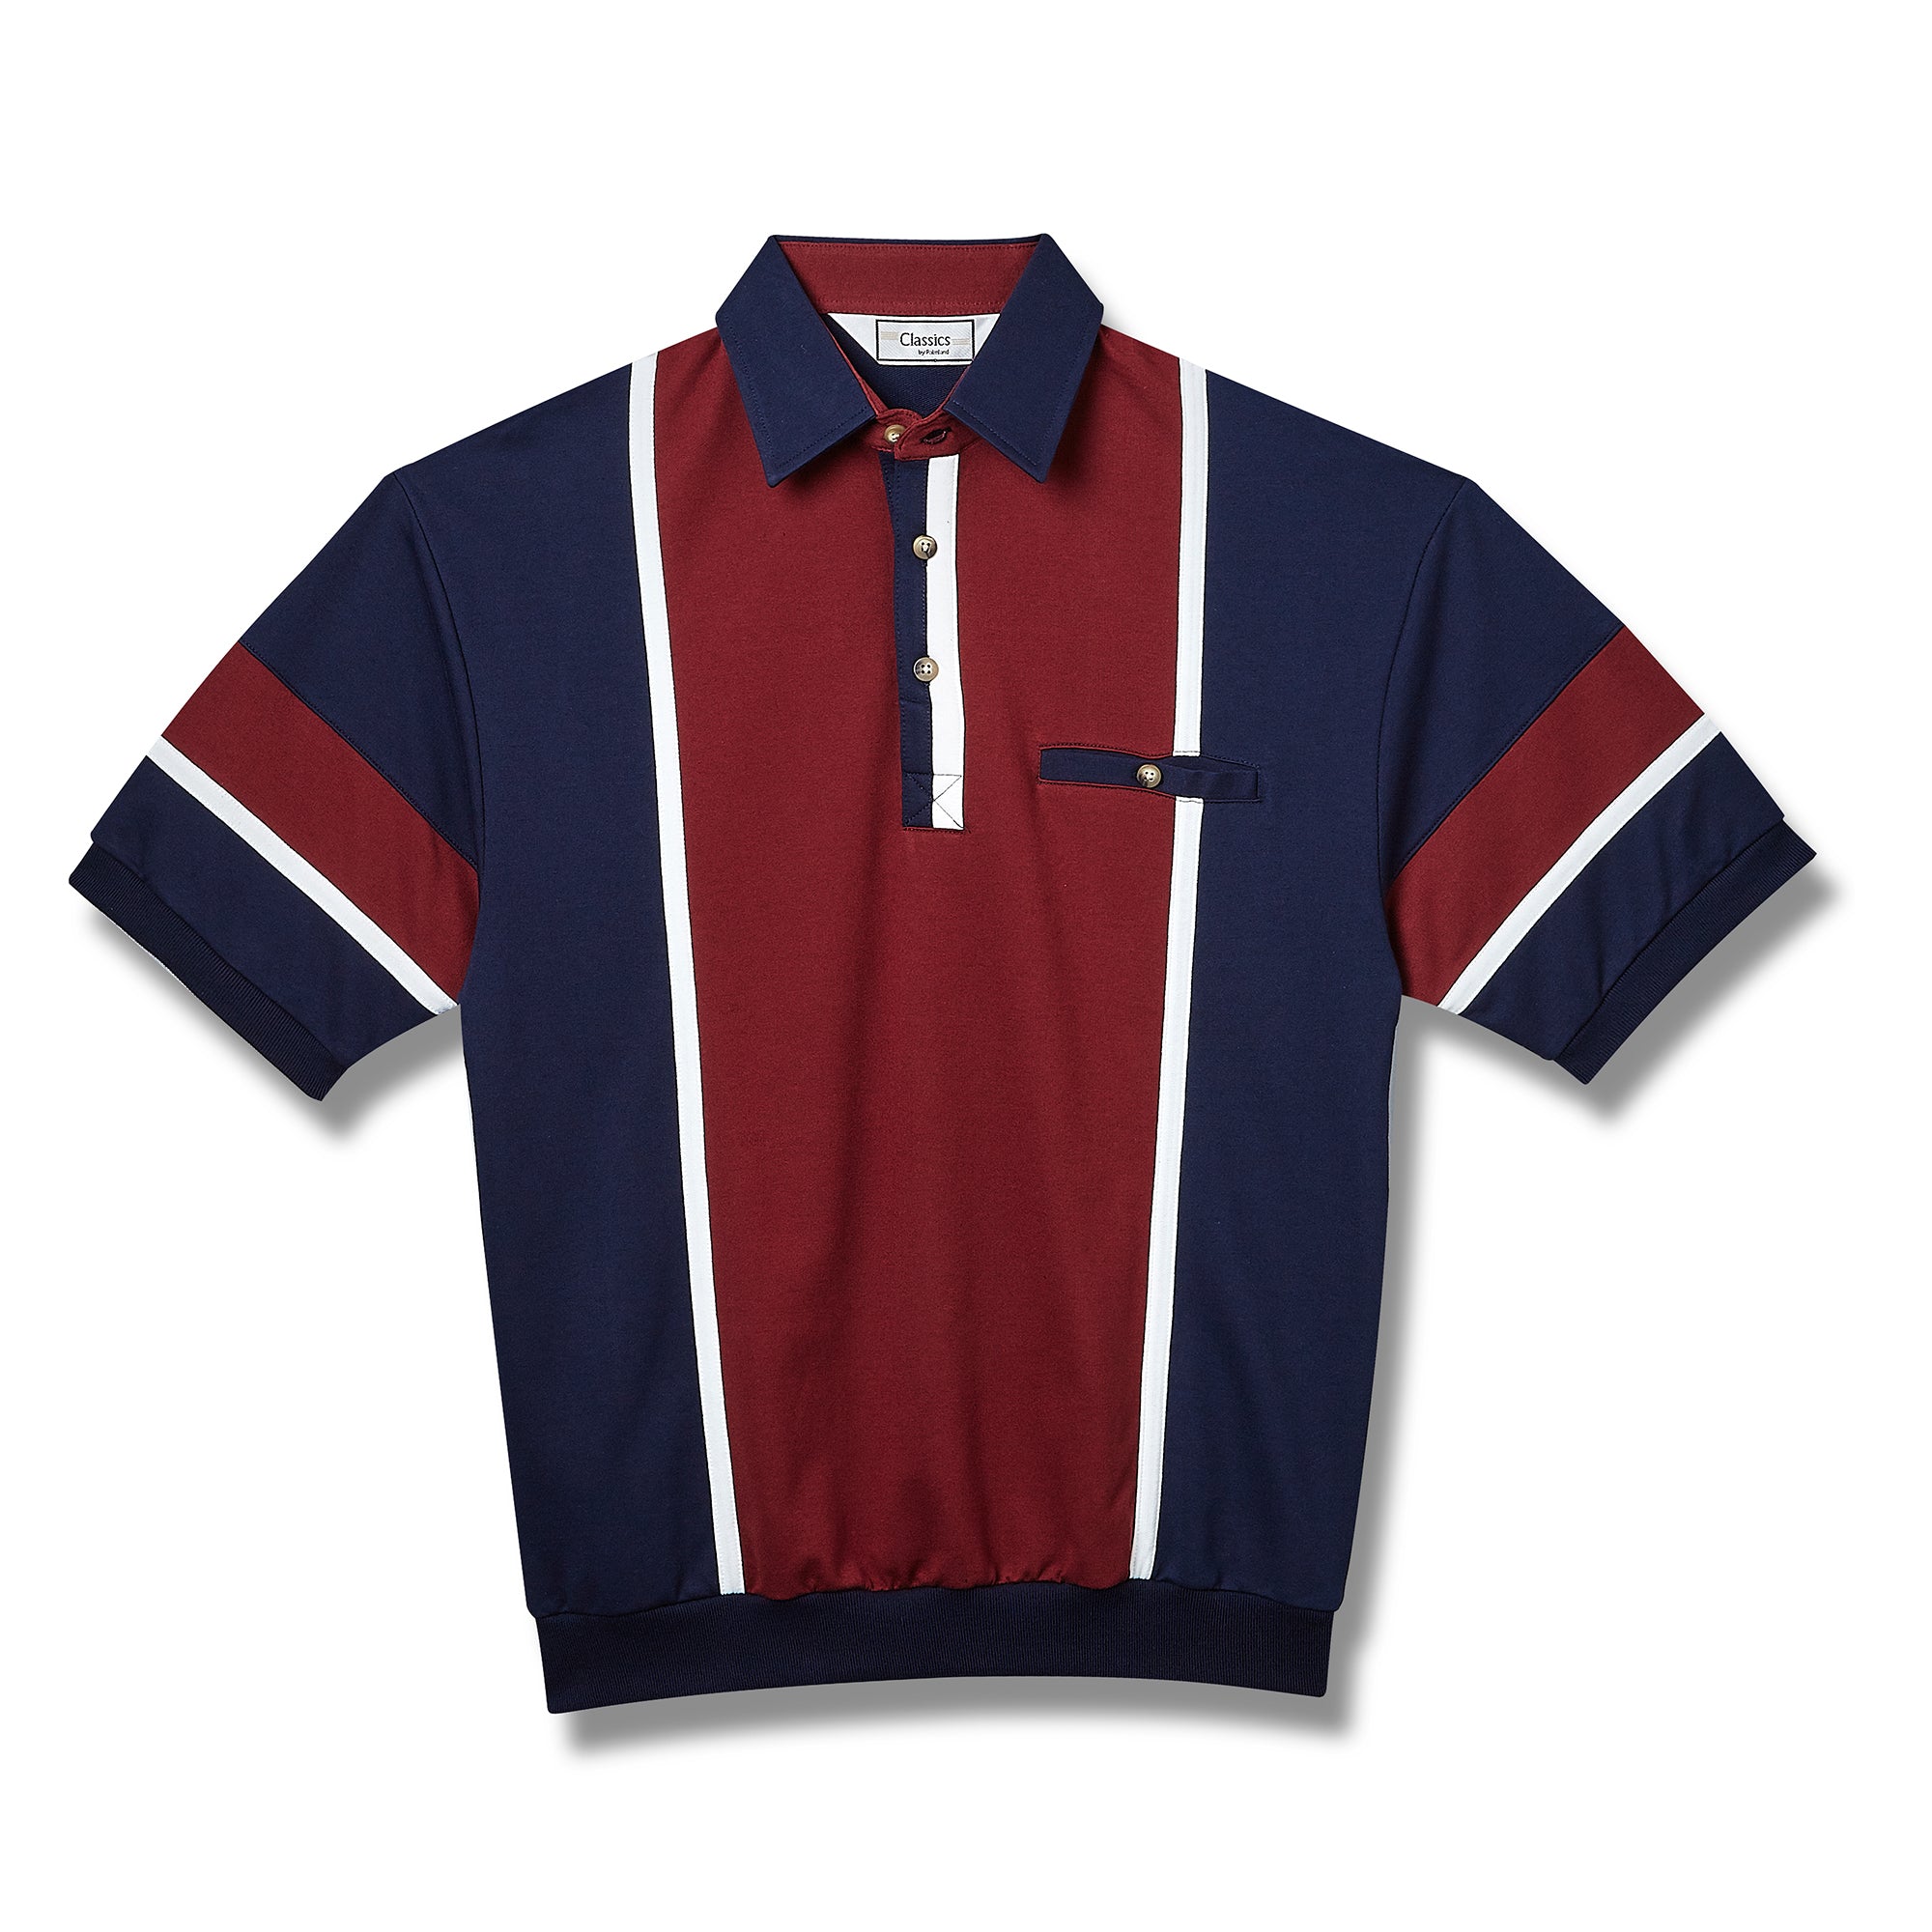 Classics by Palmland Two Tone Banded Bottom Shirt 6090-262B Burgundy - theflagshirt